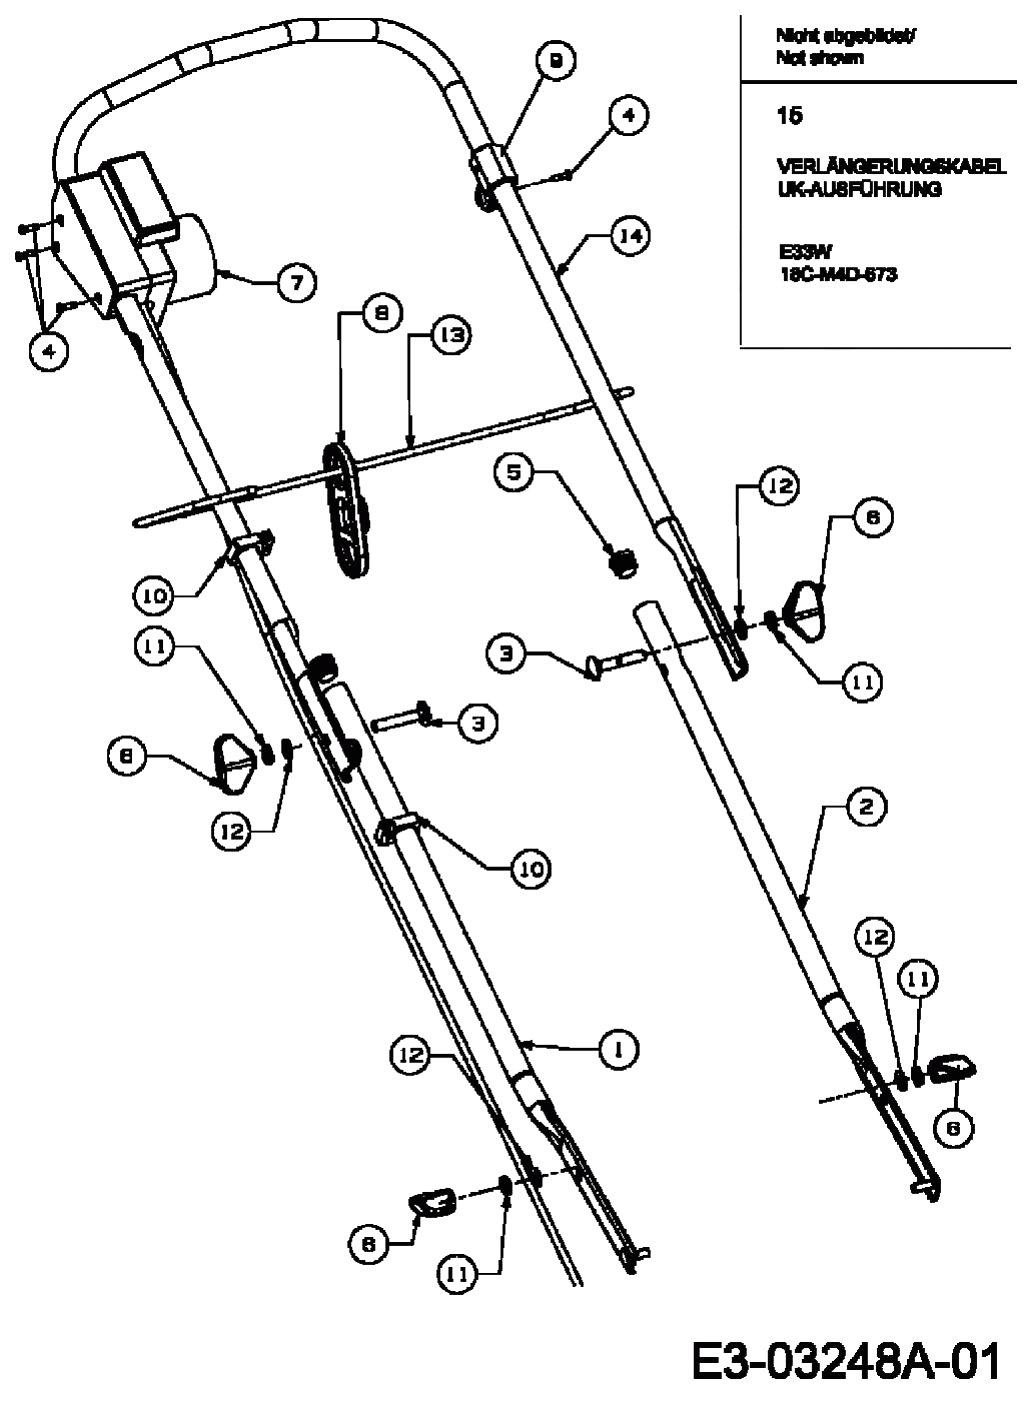 MTD Артикул 18C-M4D-673 (год выпуска 2007). Ручка